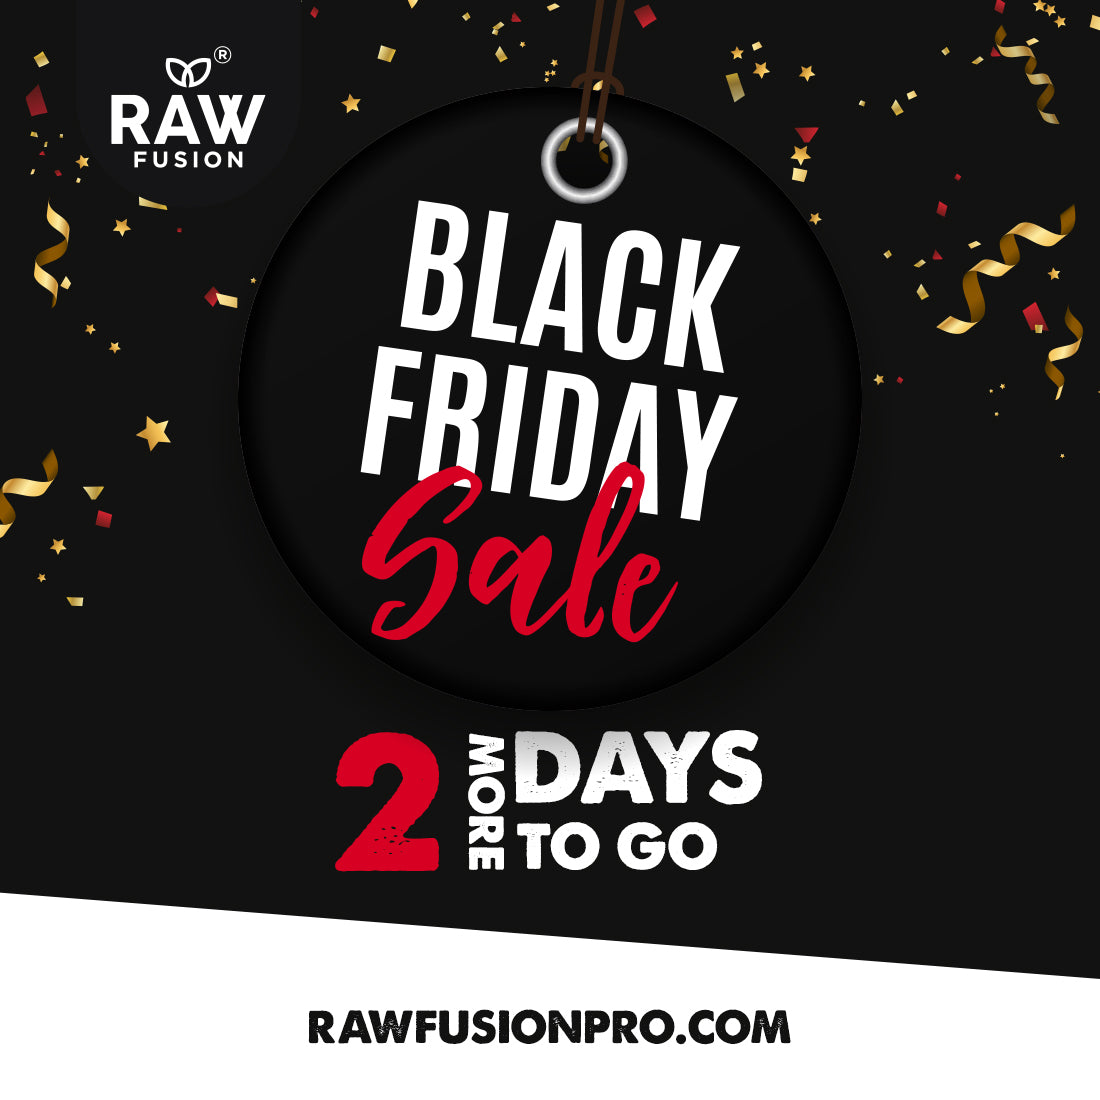 Black Friday sale at Raw Fusion!